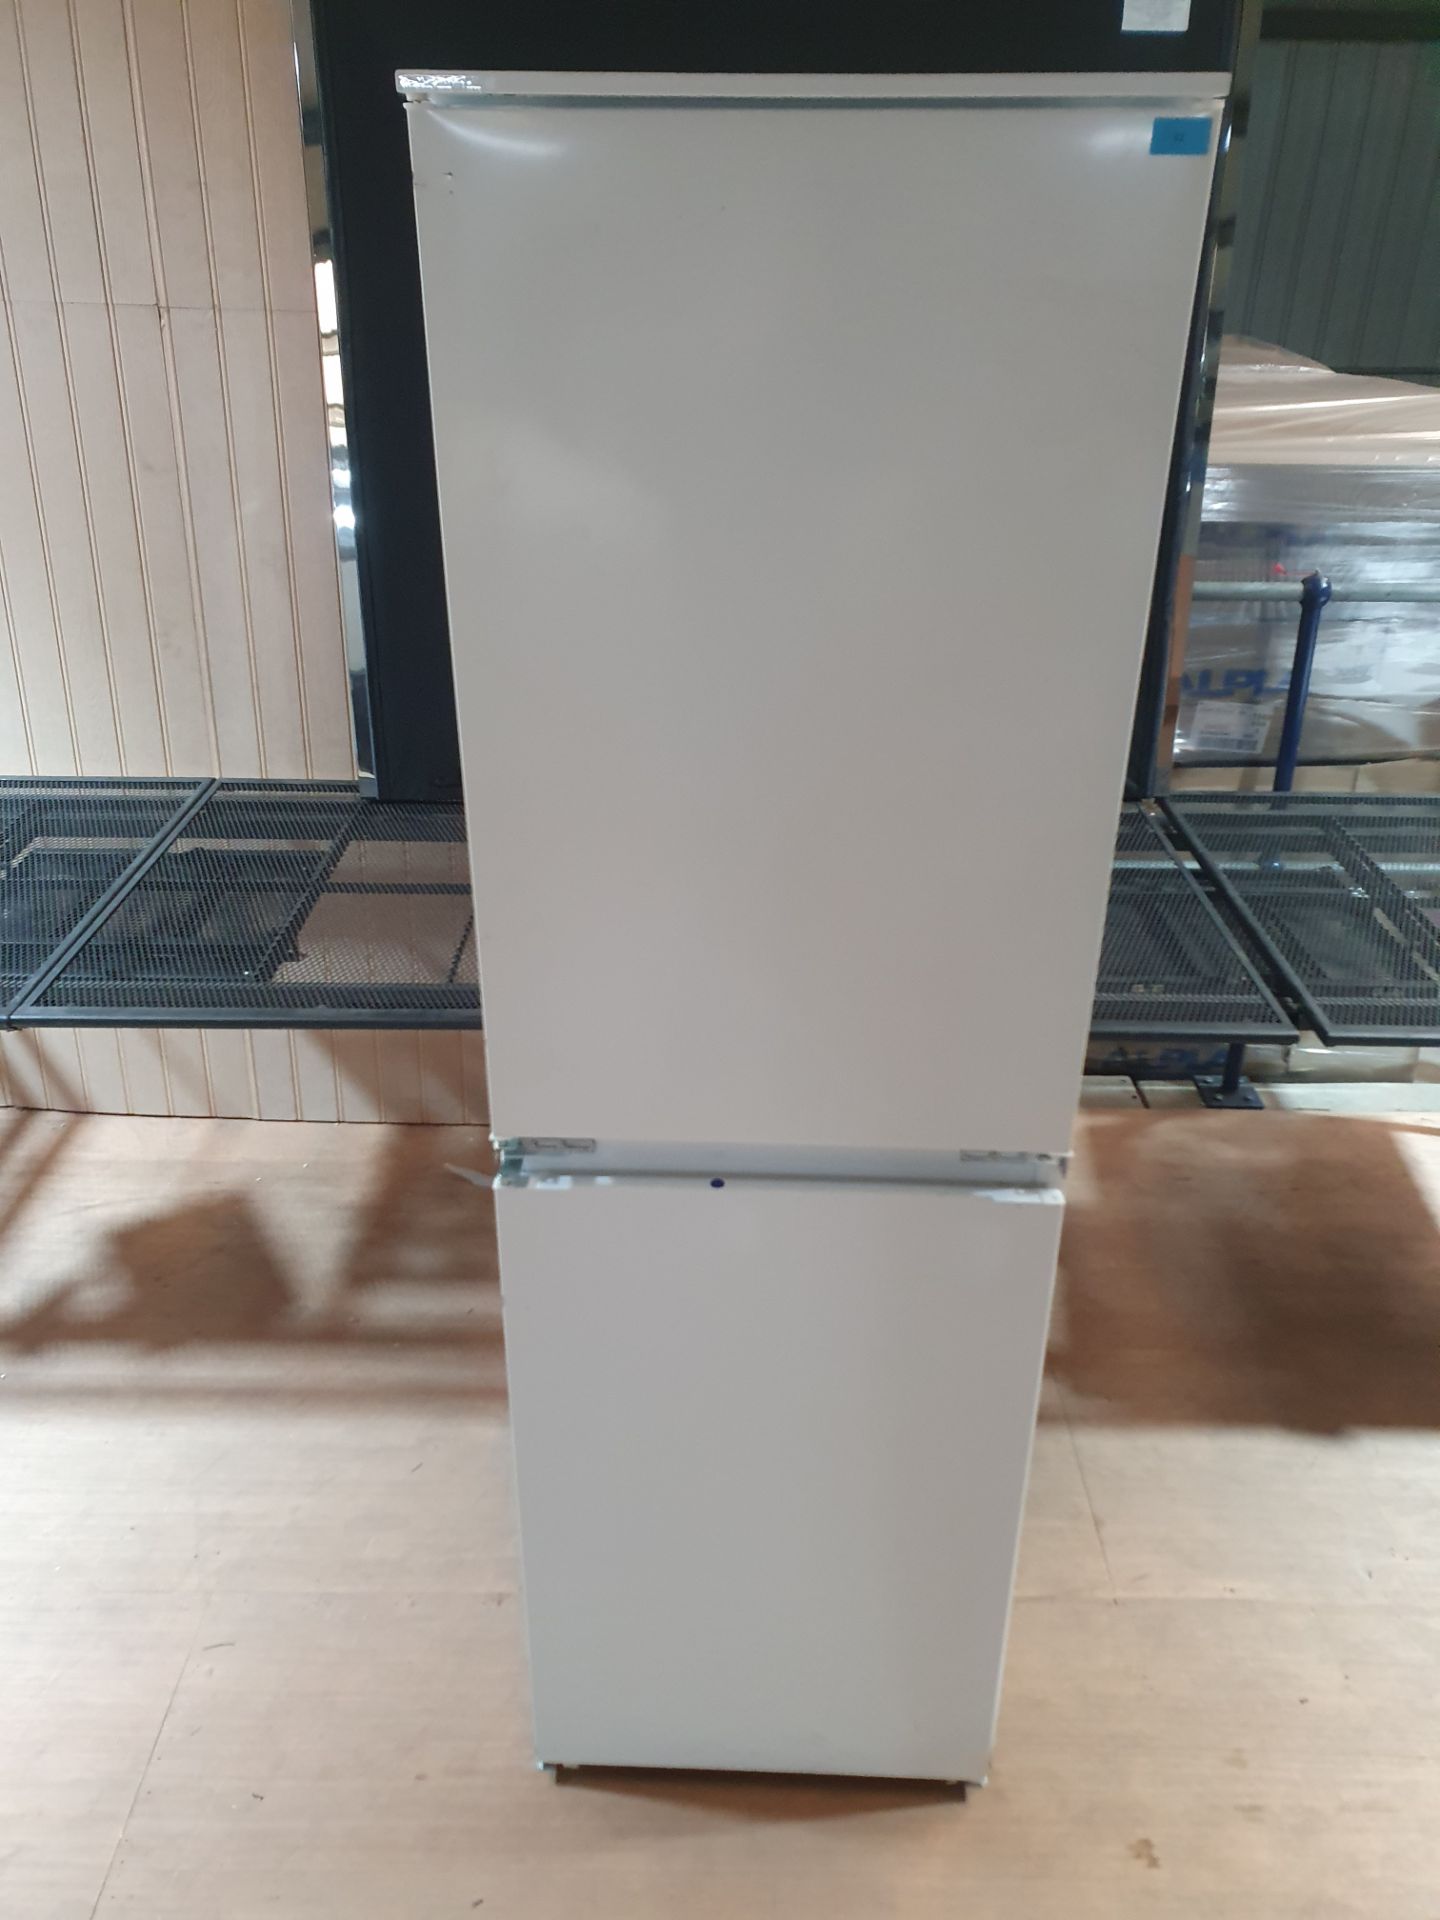 Current Online Price £859. Smeg Universal Built In Right Hinge Refrigerator White UKC4172F